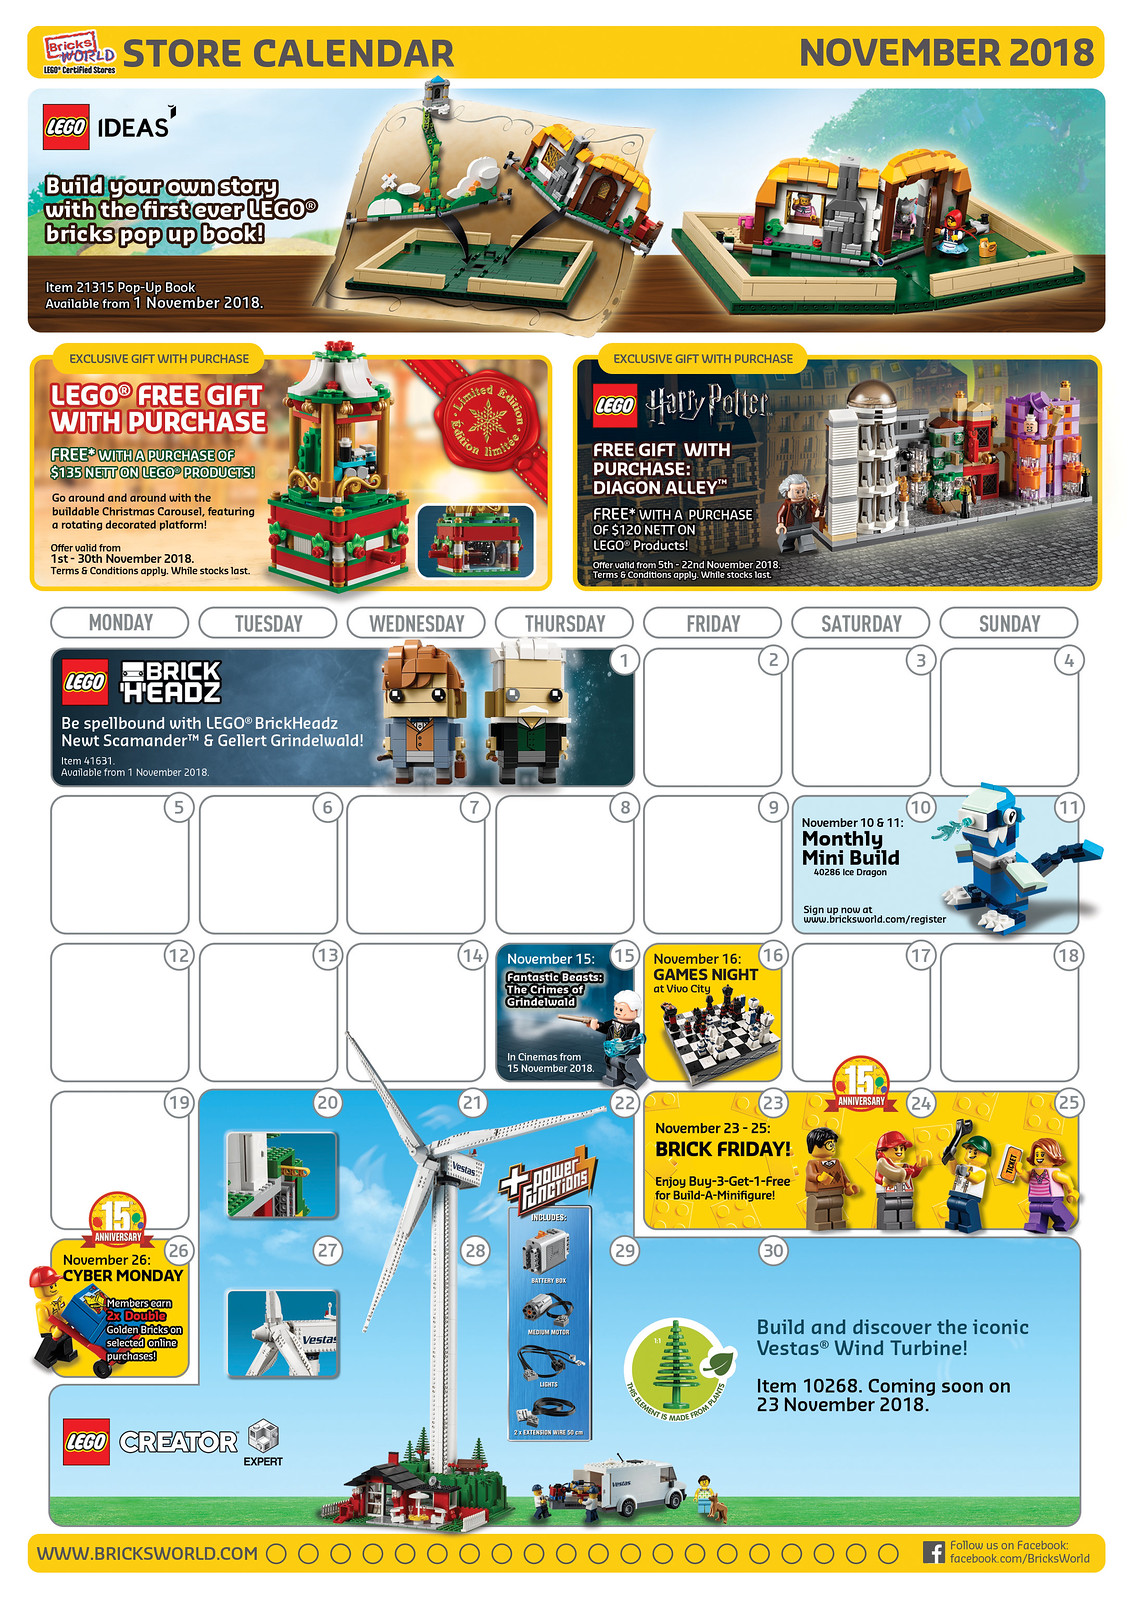 Brickfinder Bricksworld LEGO Certified Store Calendar November 2018